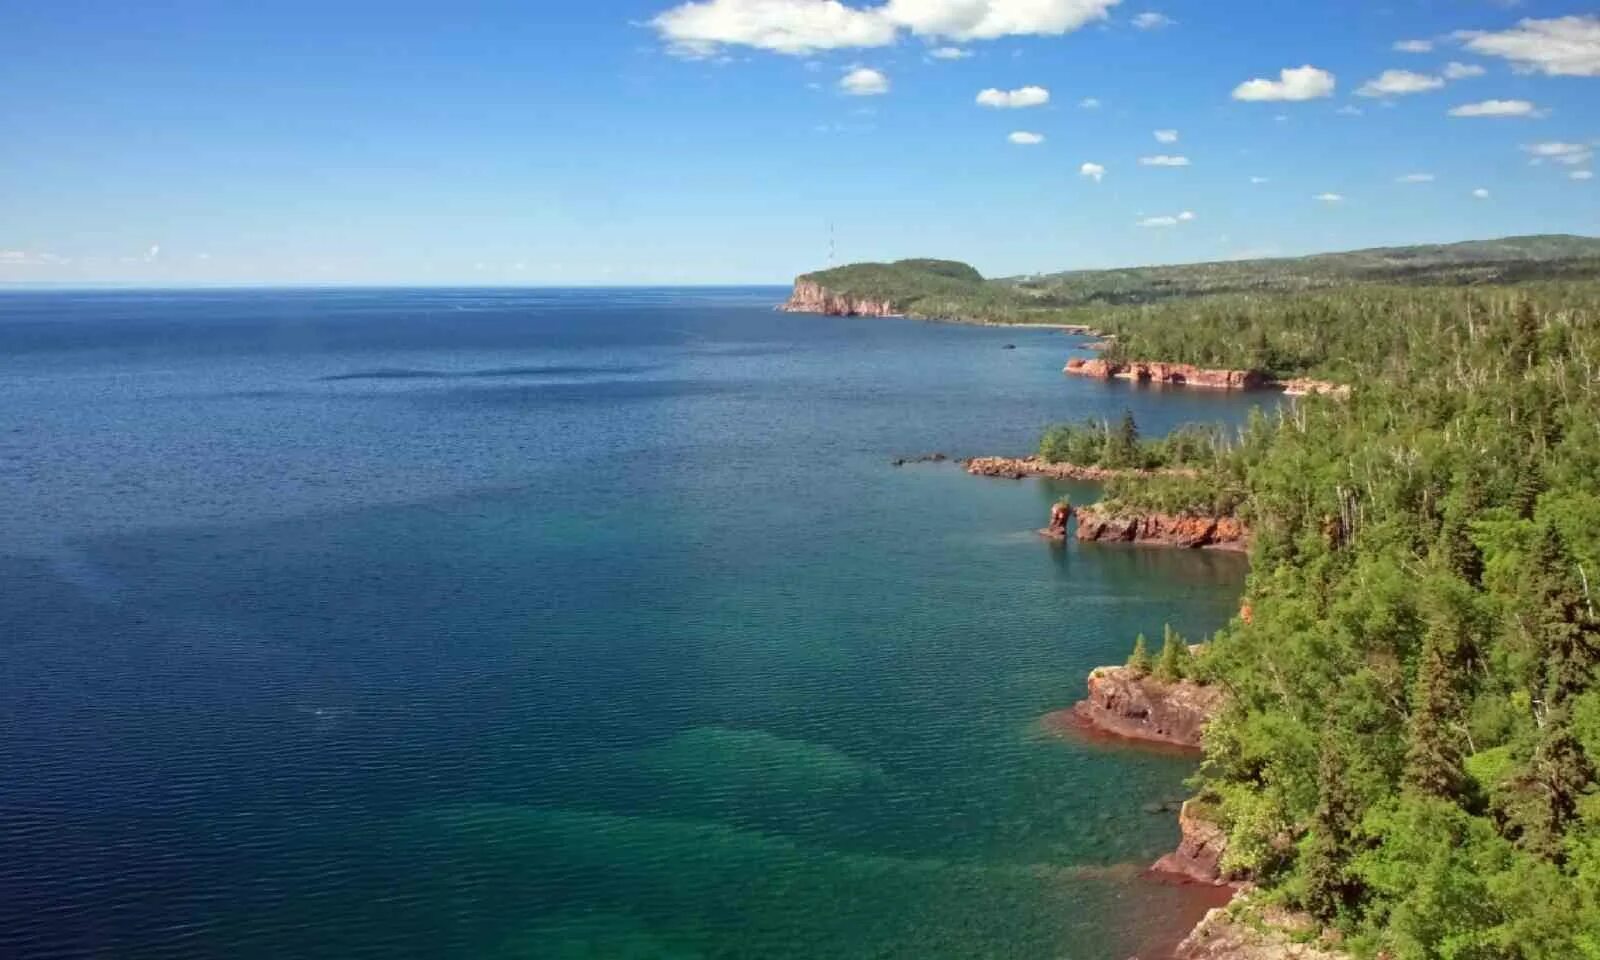 Верхнее озеро (Lake Superior). Канада. Озеро Гурон Северная Америка. Великие американские озёра верхнее Гурон Мичиган Эри Онтарио. Озеро Супериор США.